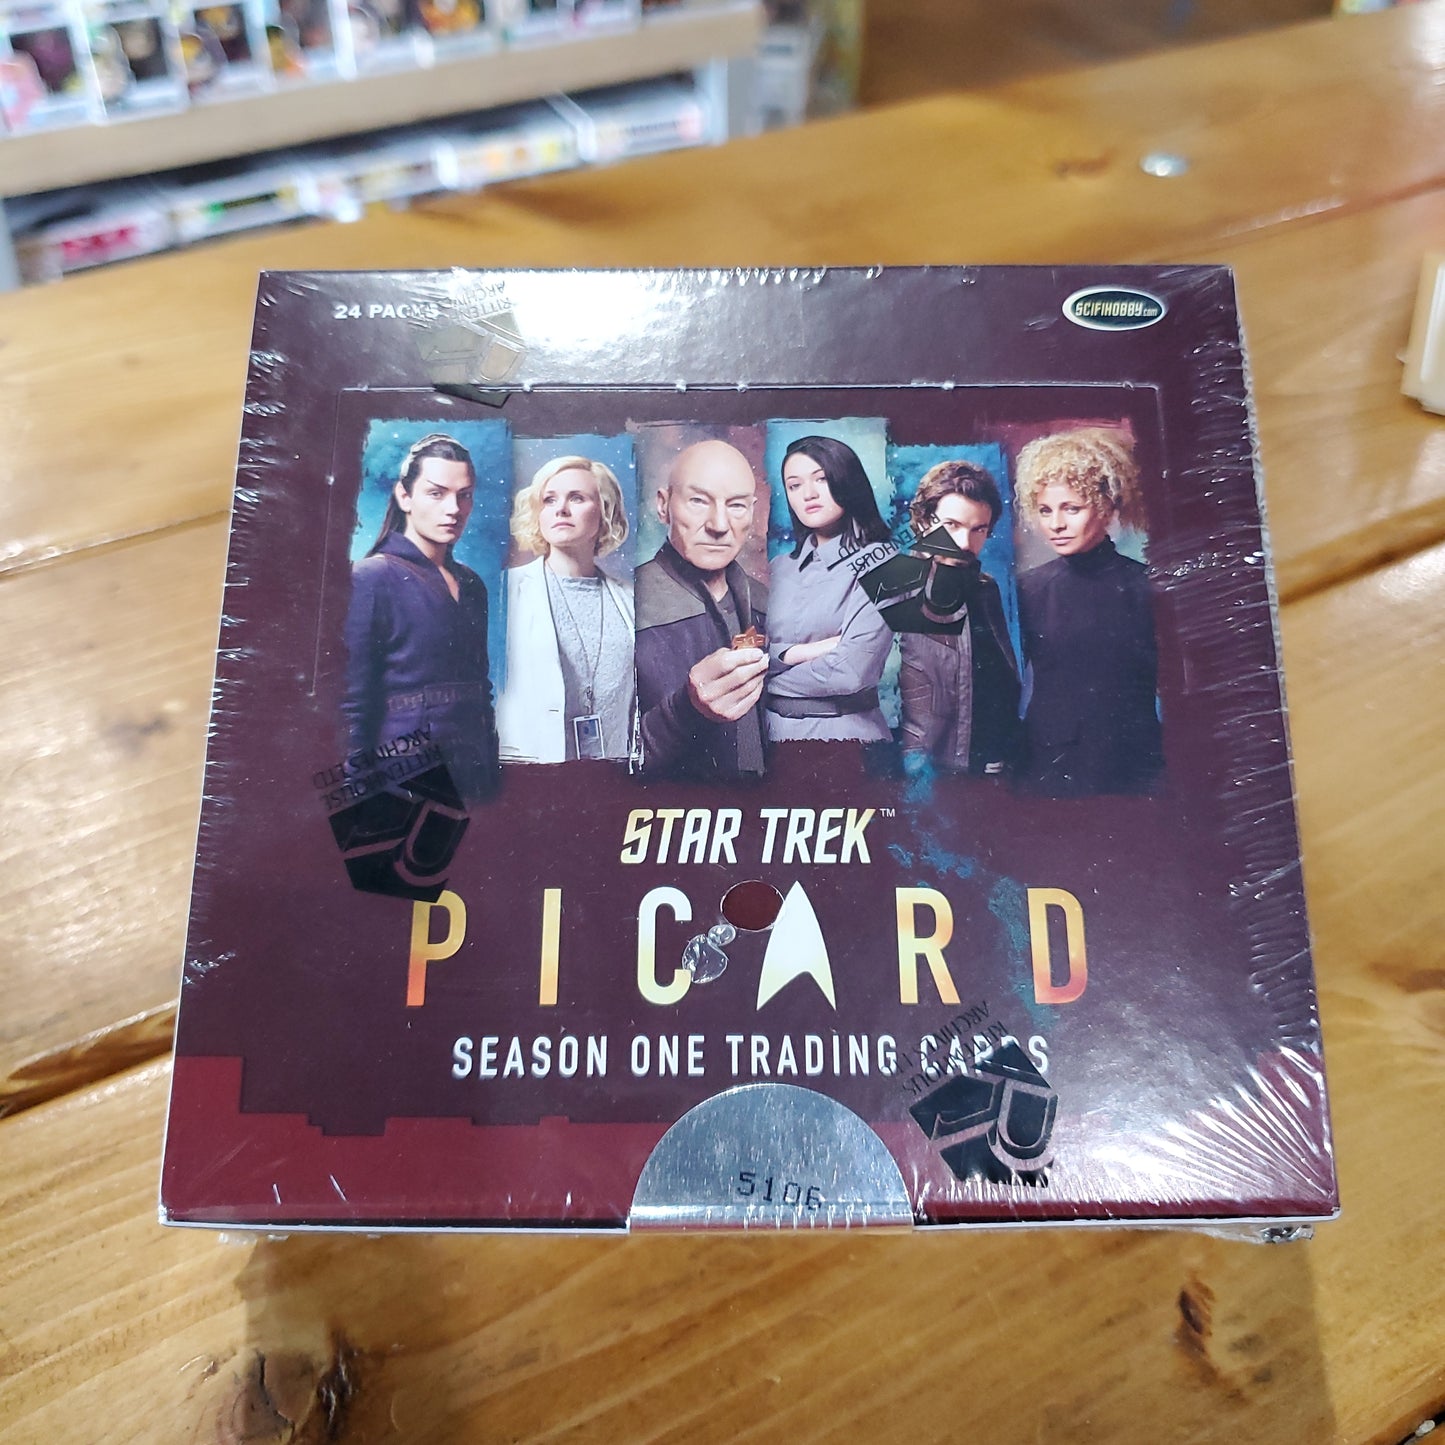 Star Trek: Picard Season One Trading Cards - Sealed Hobby Box